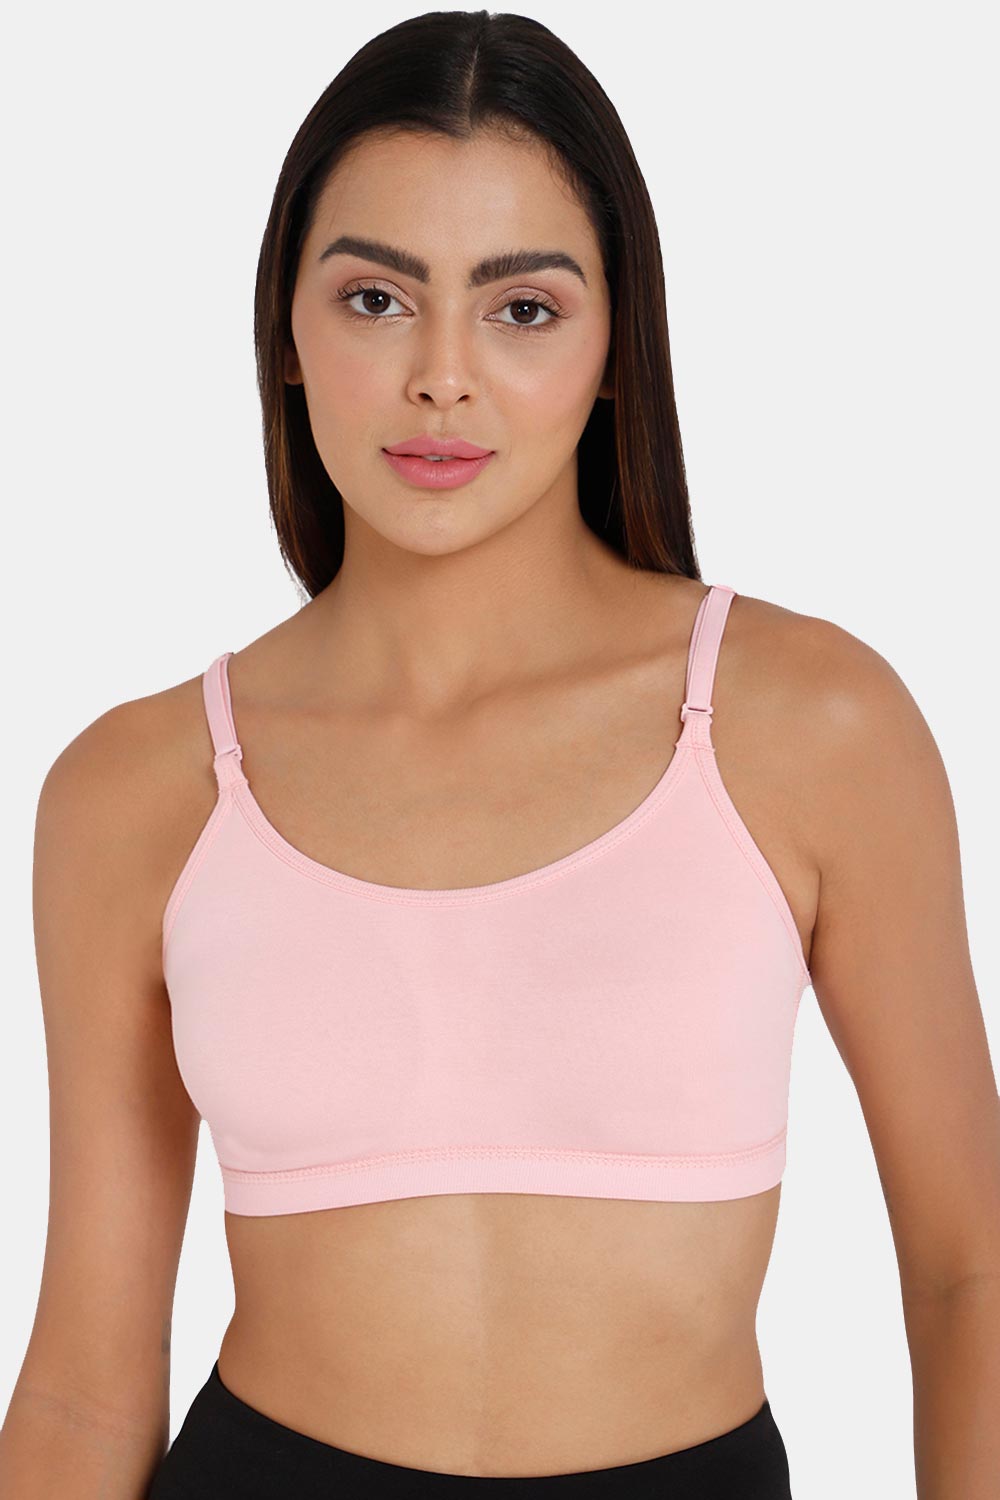 Buy R.S. Care Girl Women Non Padded Bra Size 34-Dark Pink,Set of 4